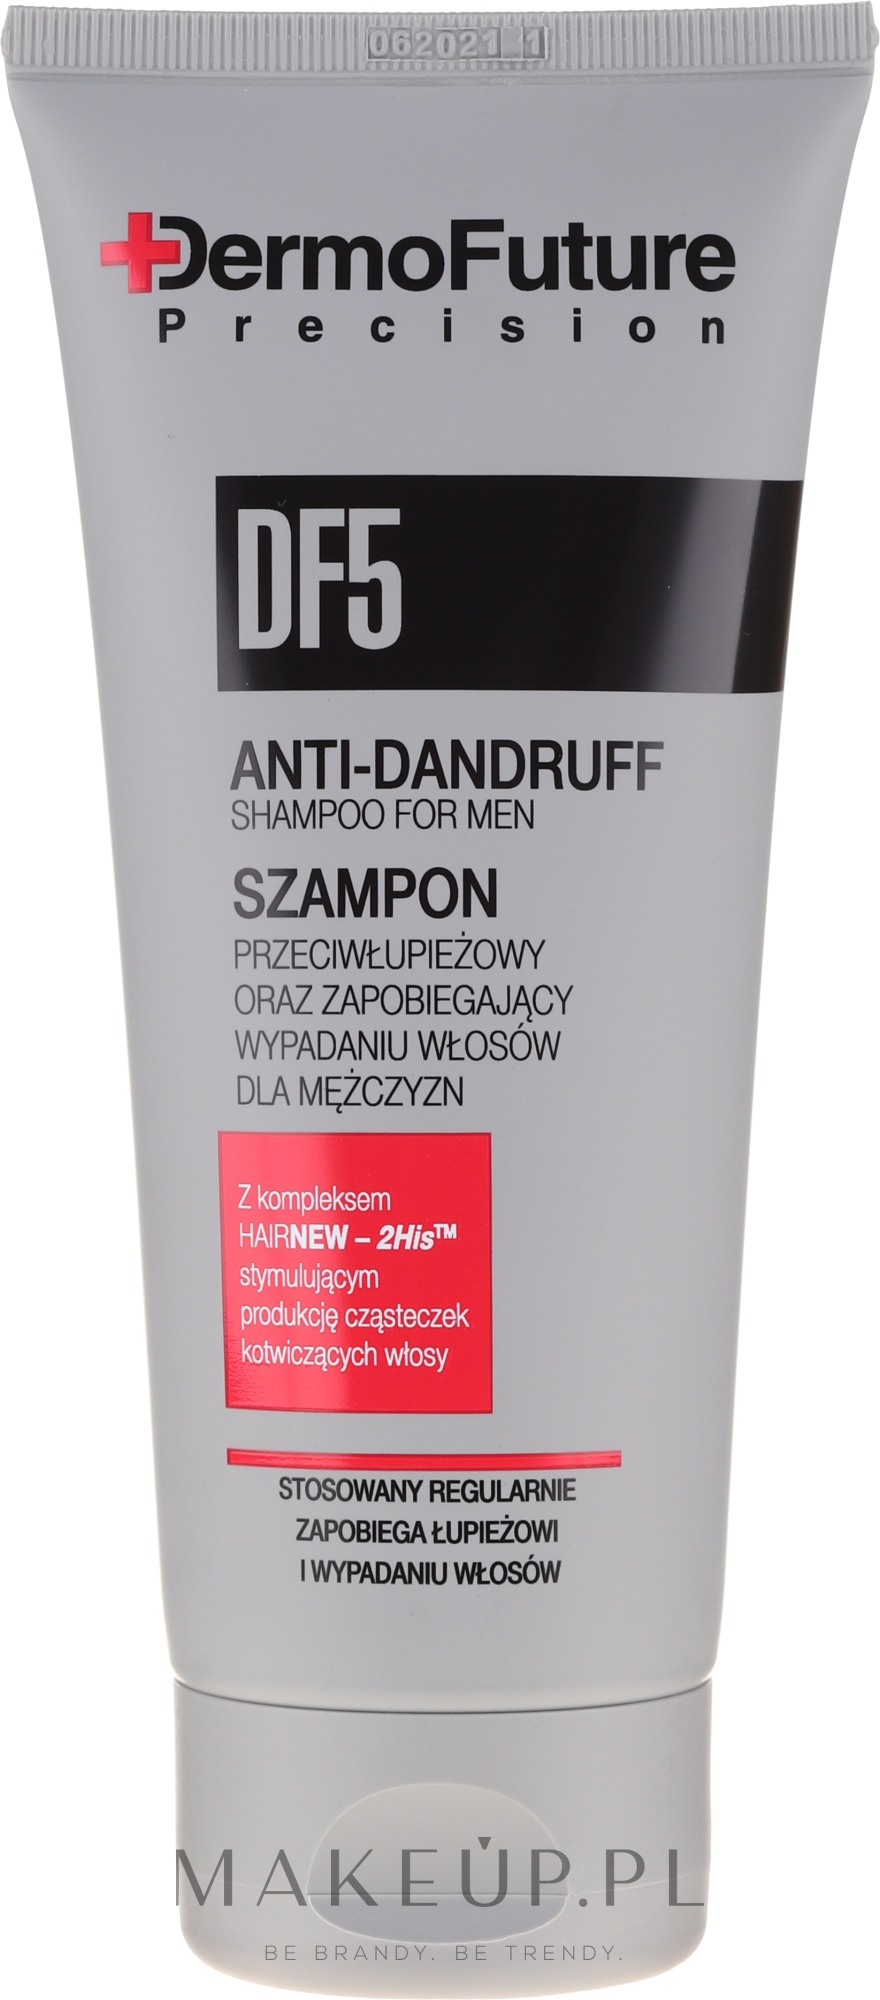 szampon df5